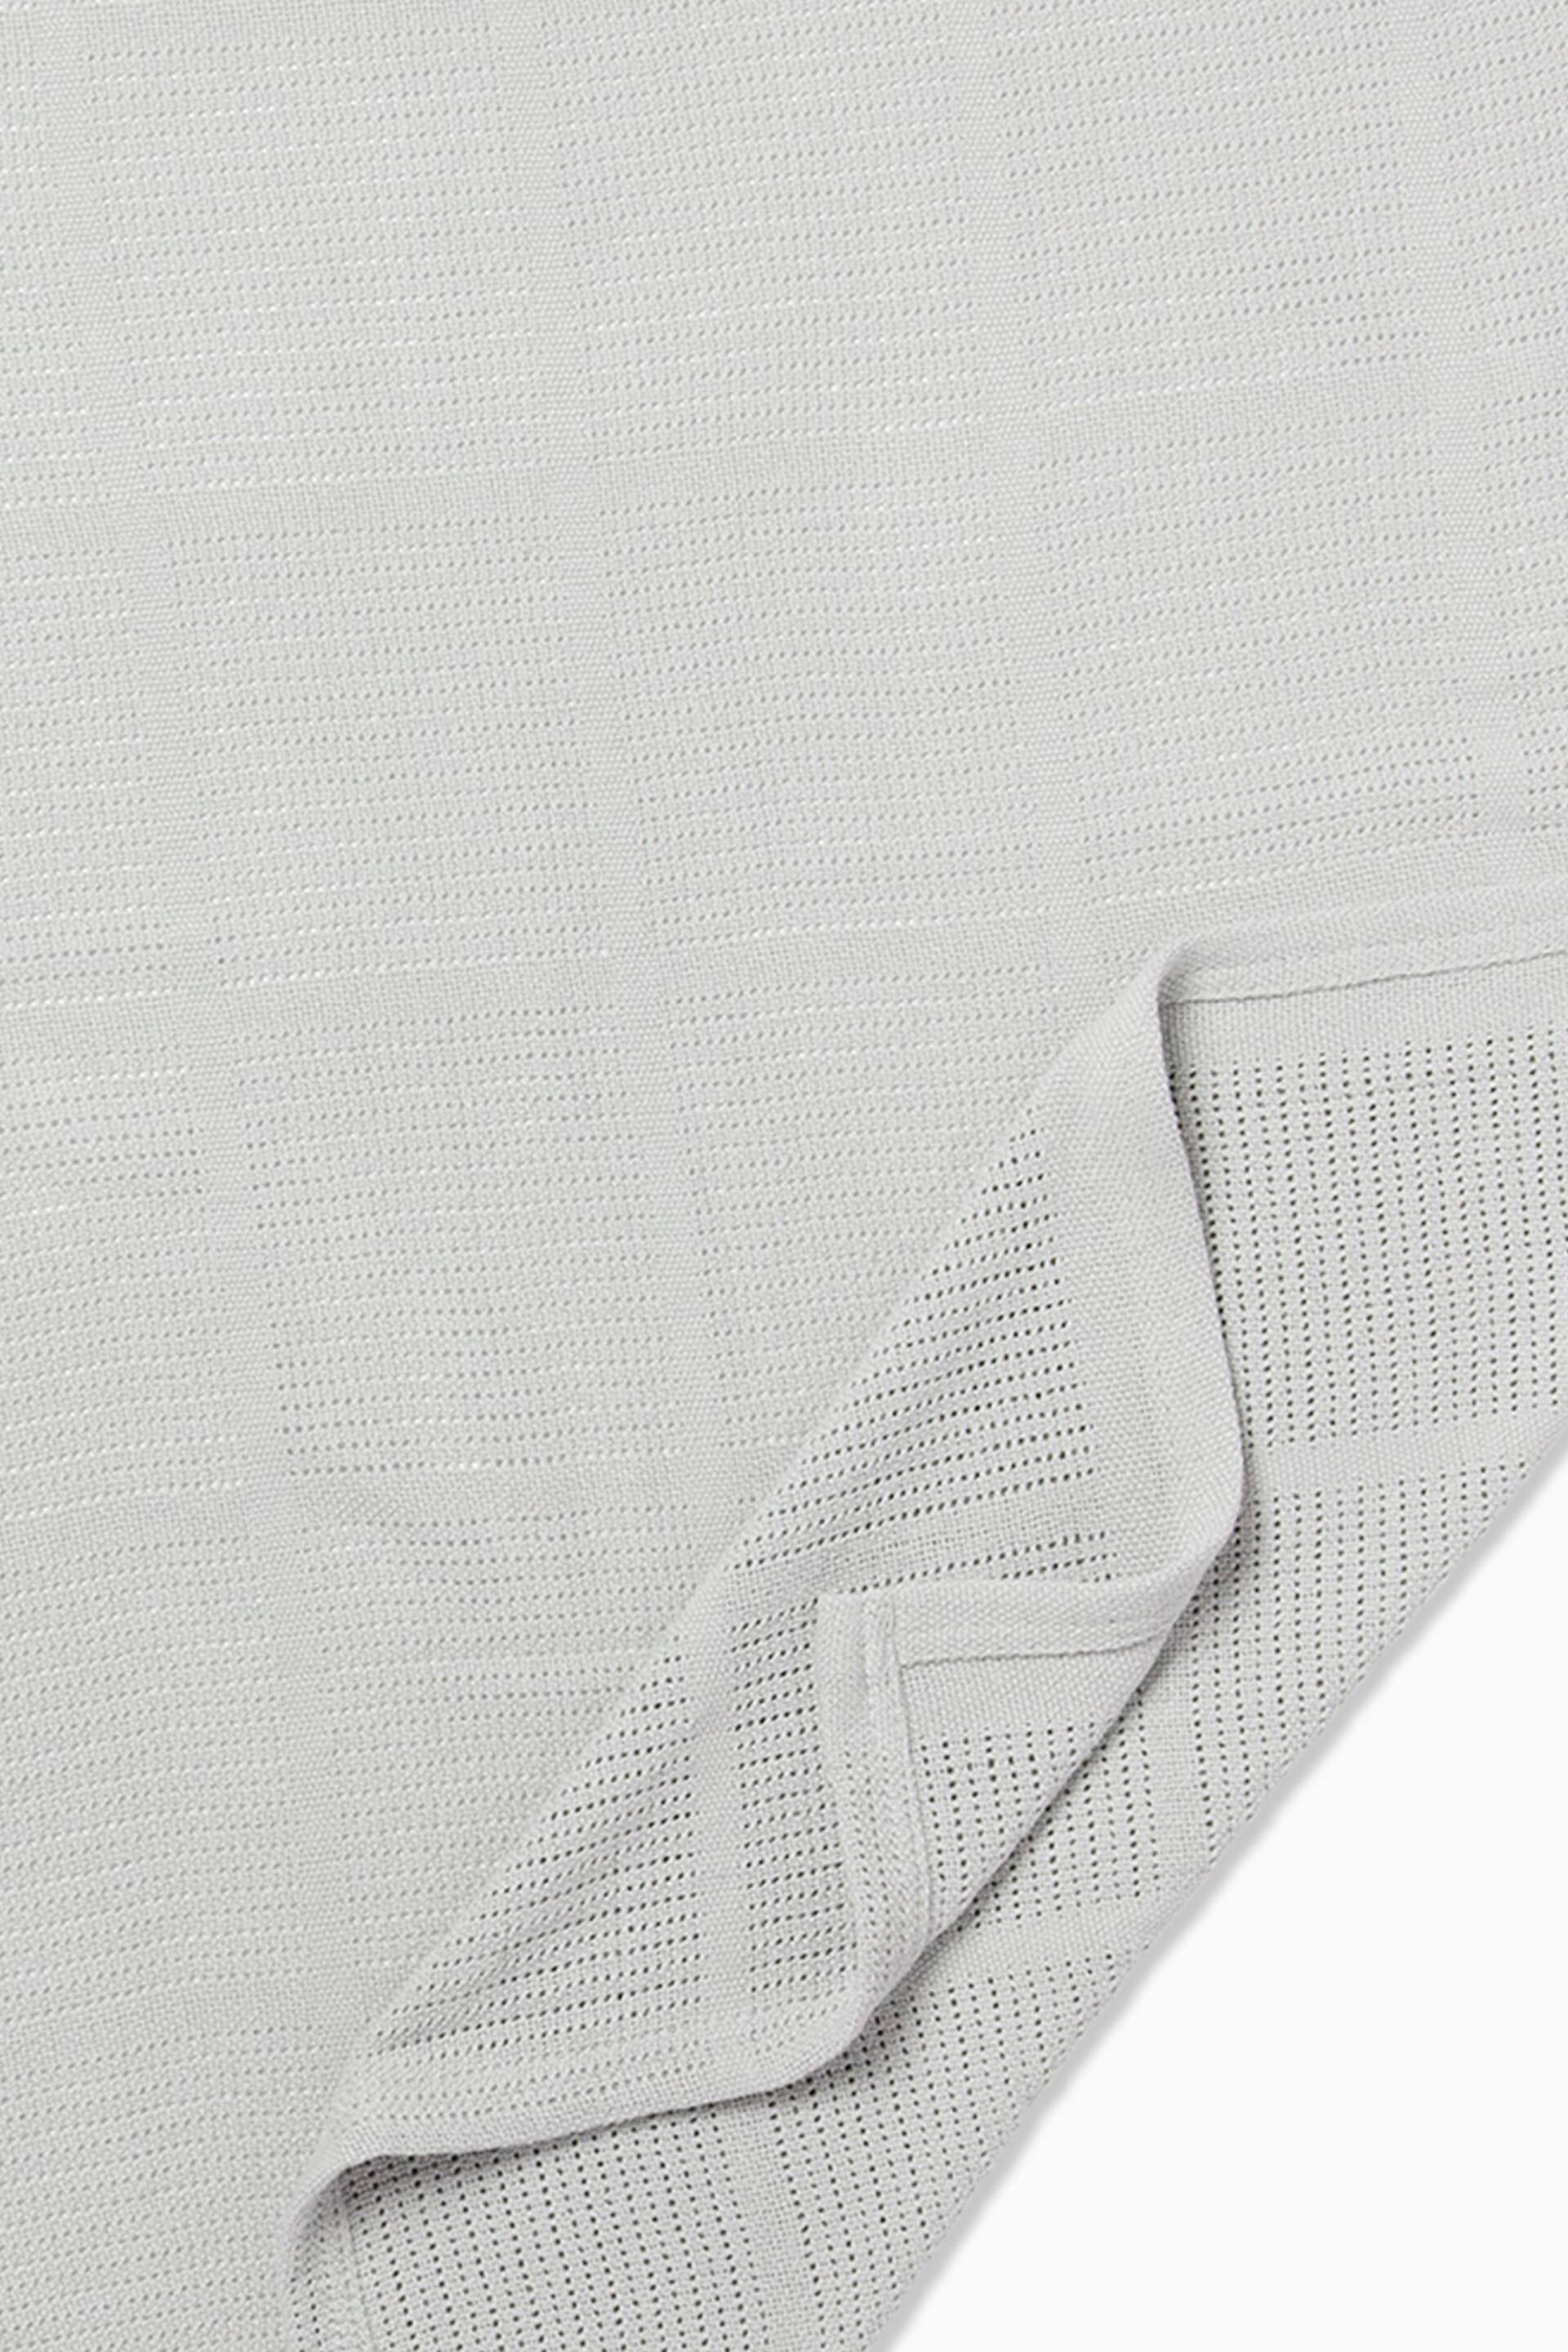 MORI Grey Soft Cotton & Bamboo Cellular Baby Blanket - Image 3 of 4